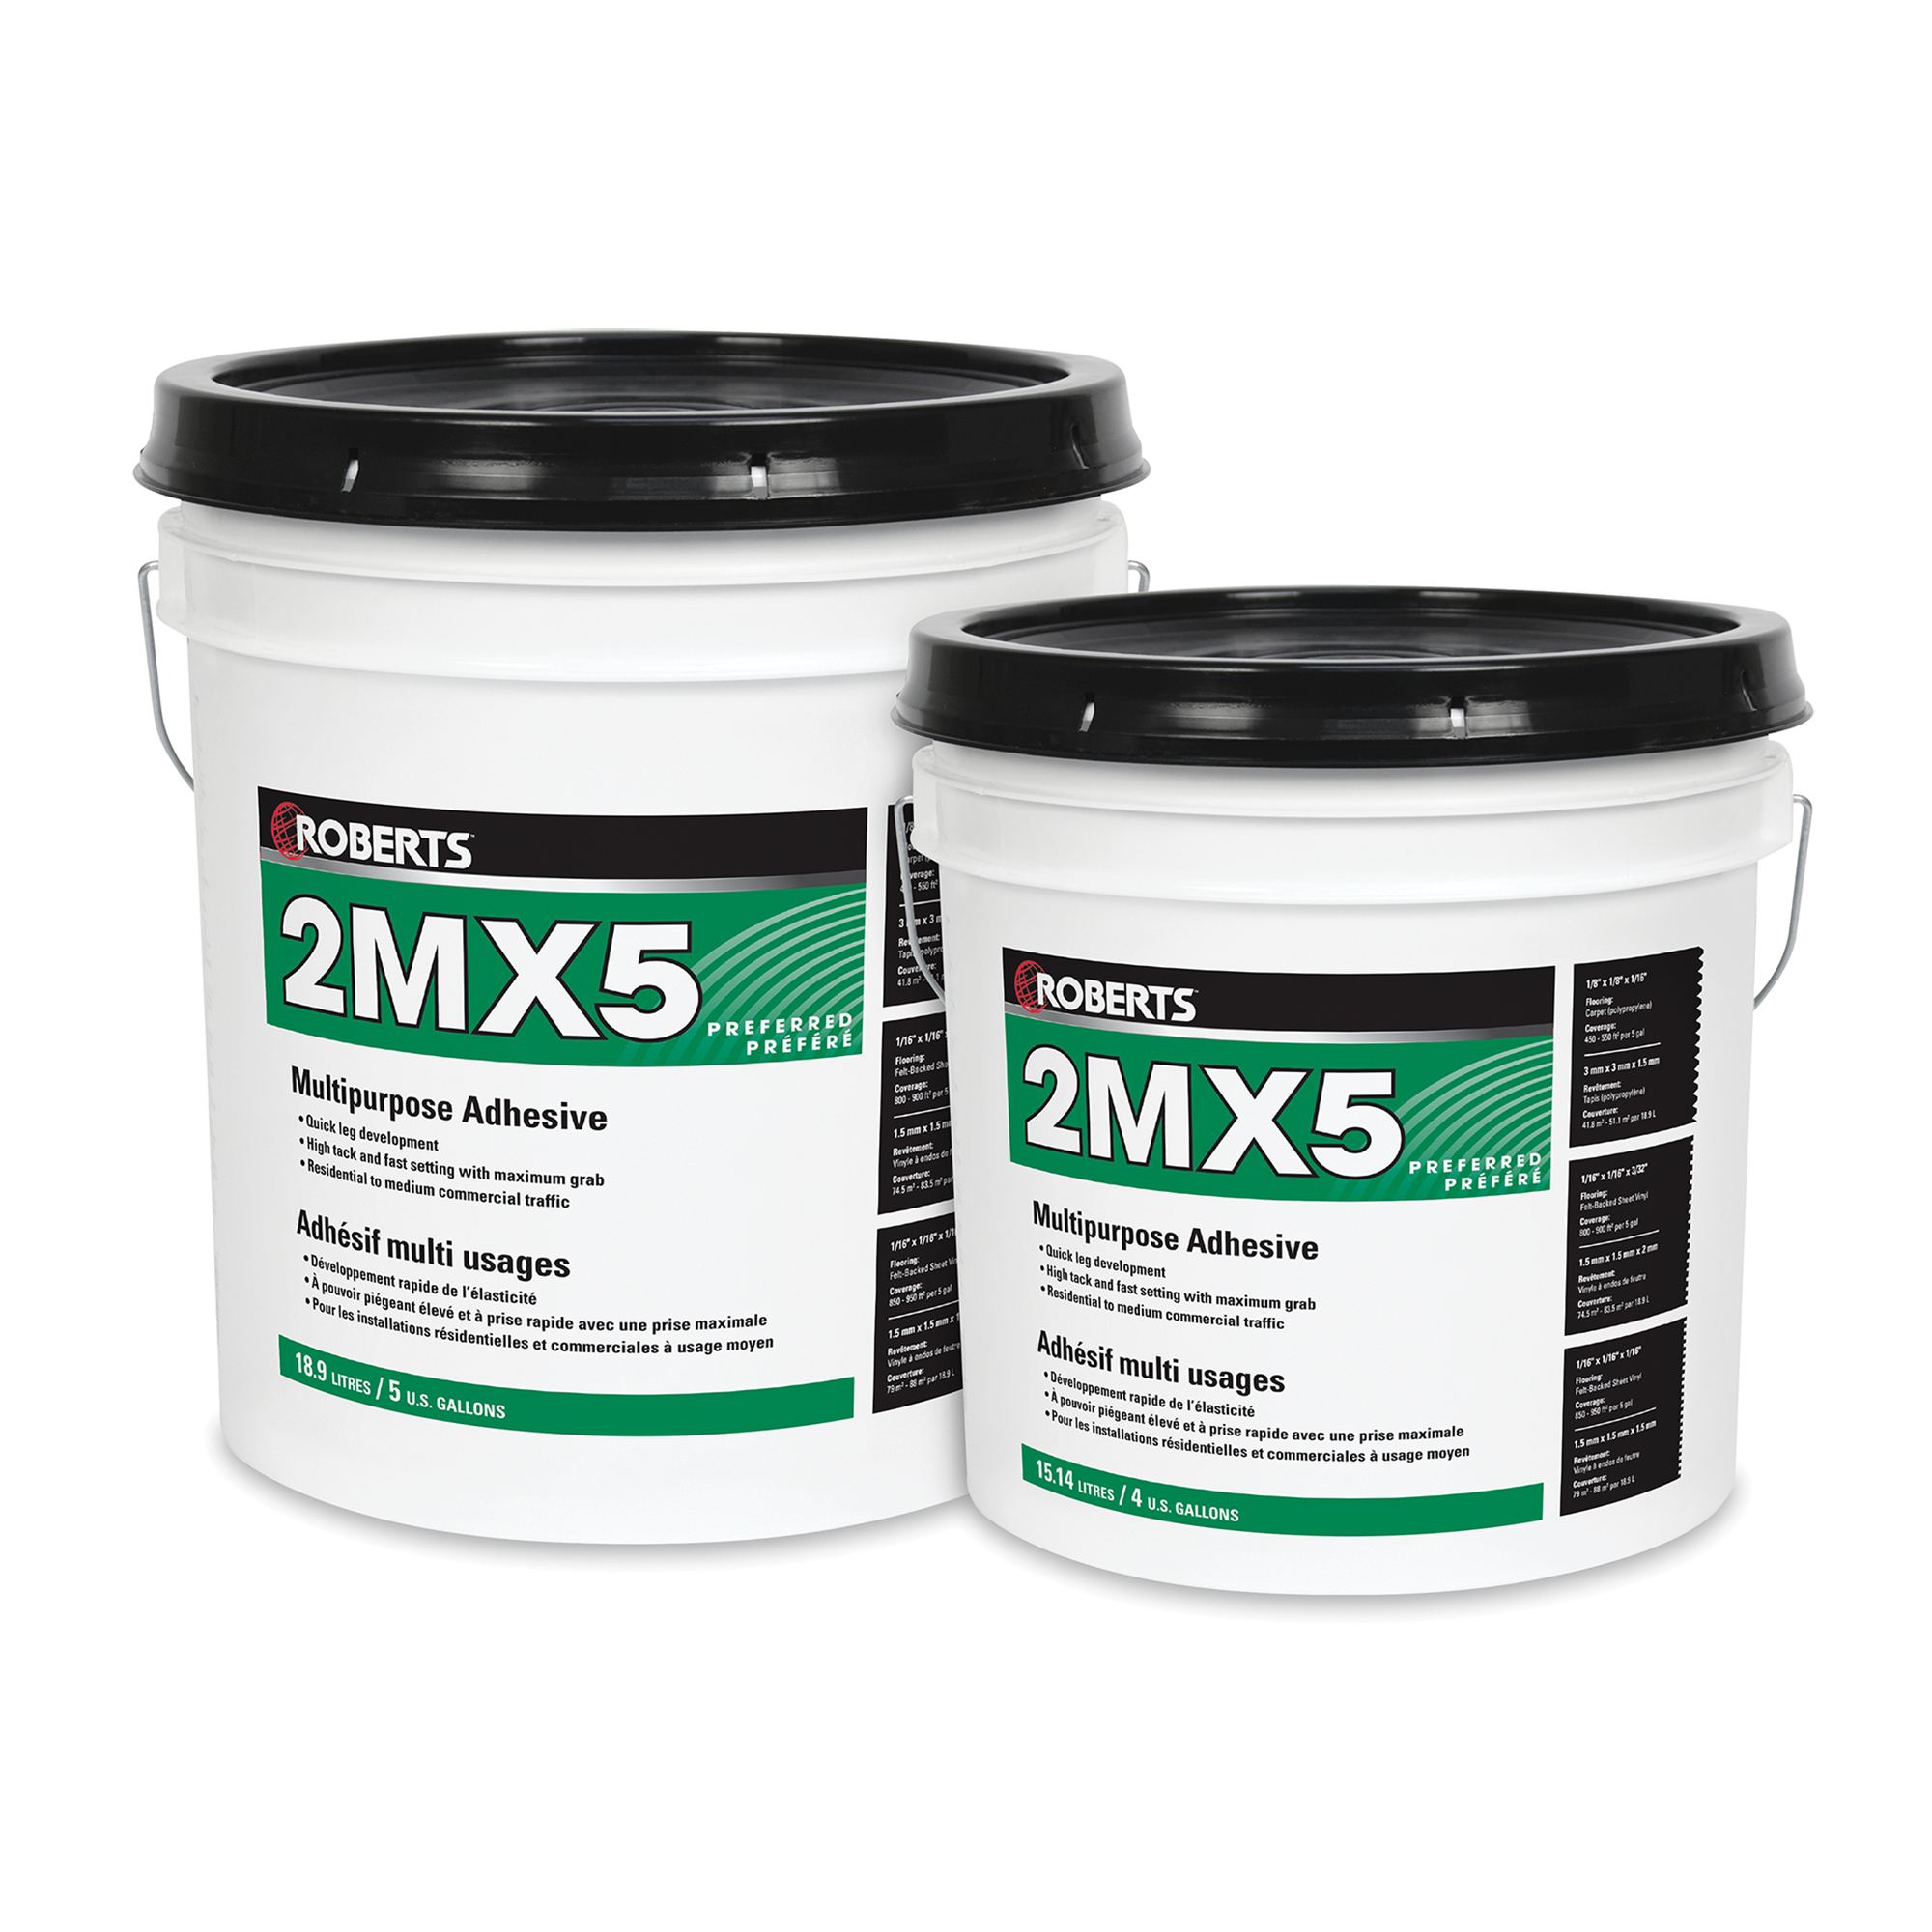 2MX5 Multipurpose Adhesive